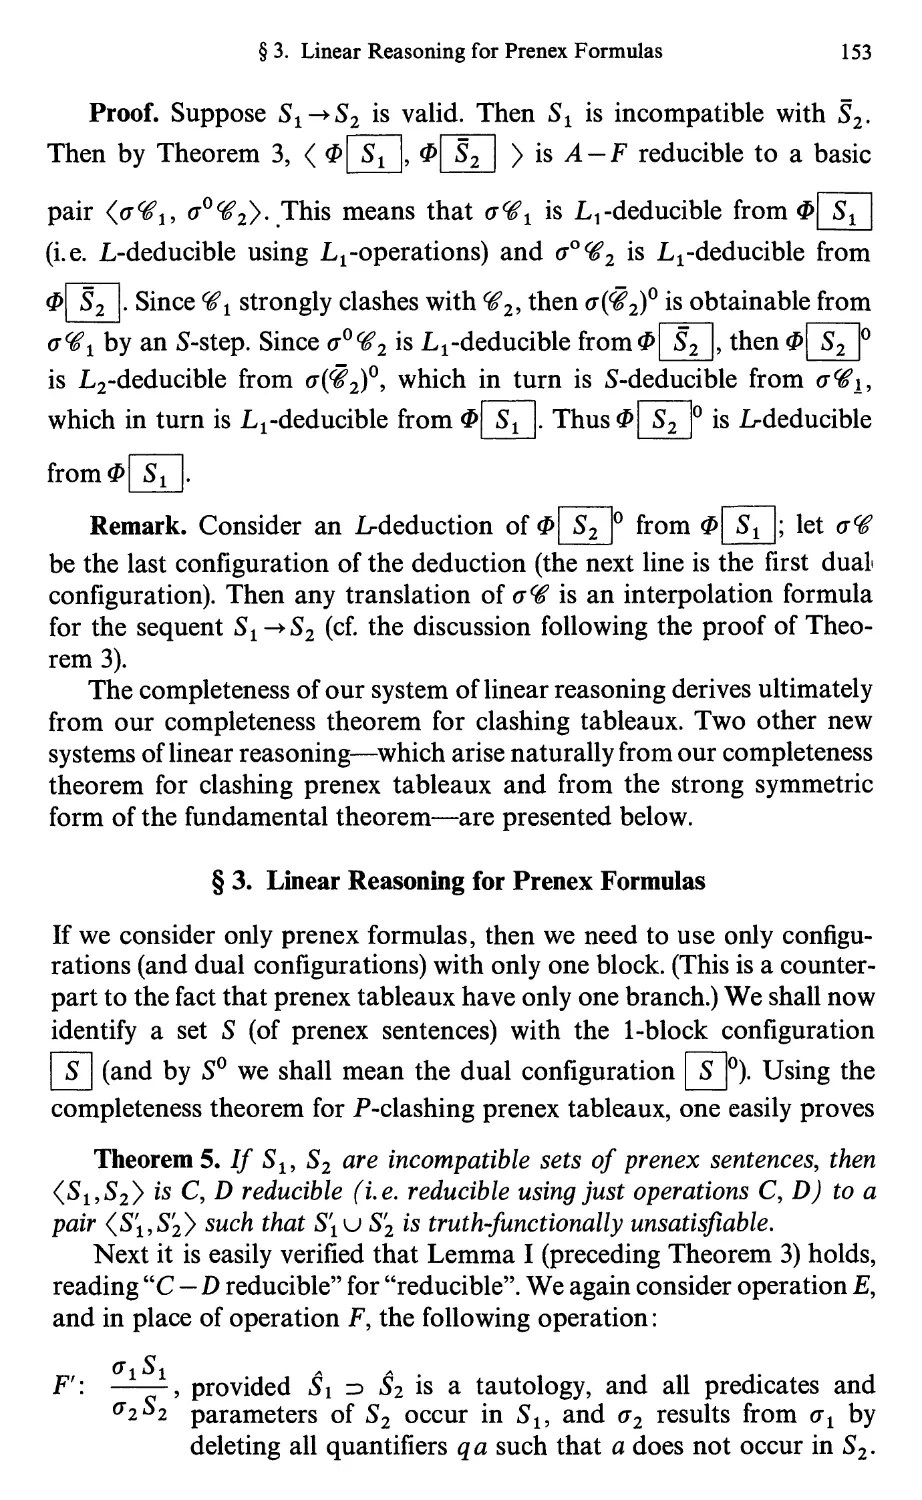 17.3 Linear Reasoning for Prenex Formulas